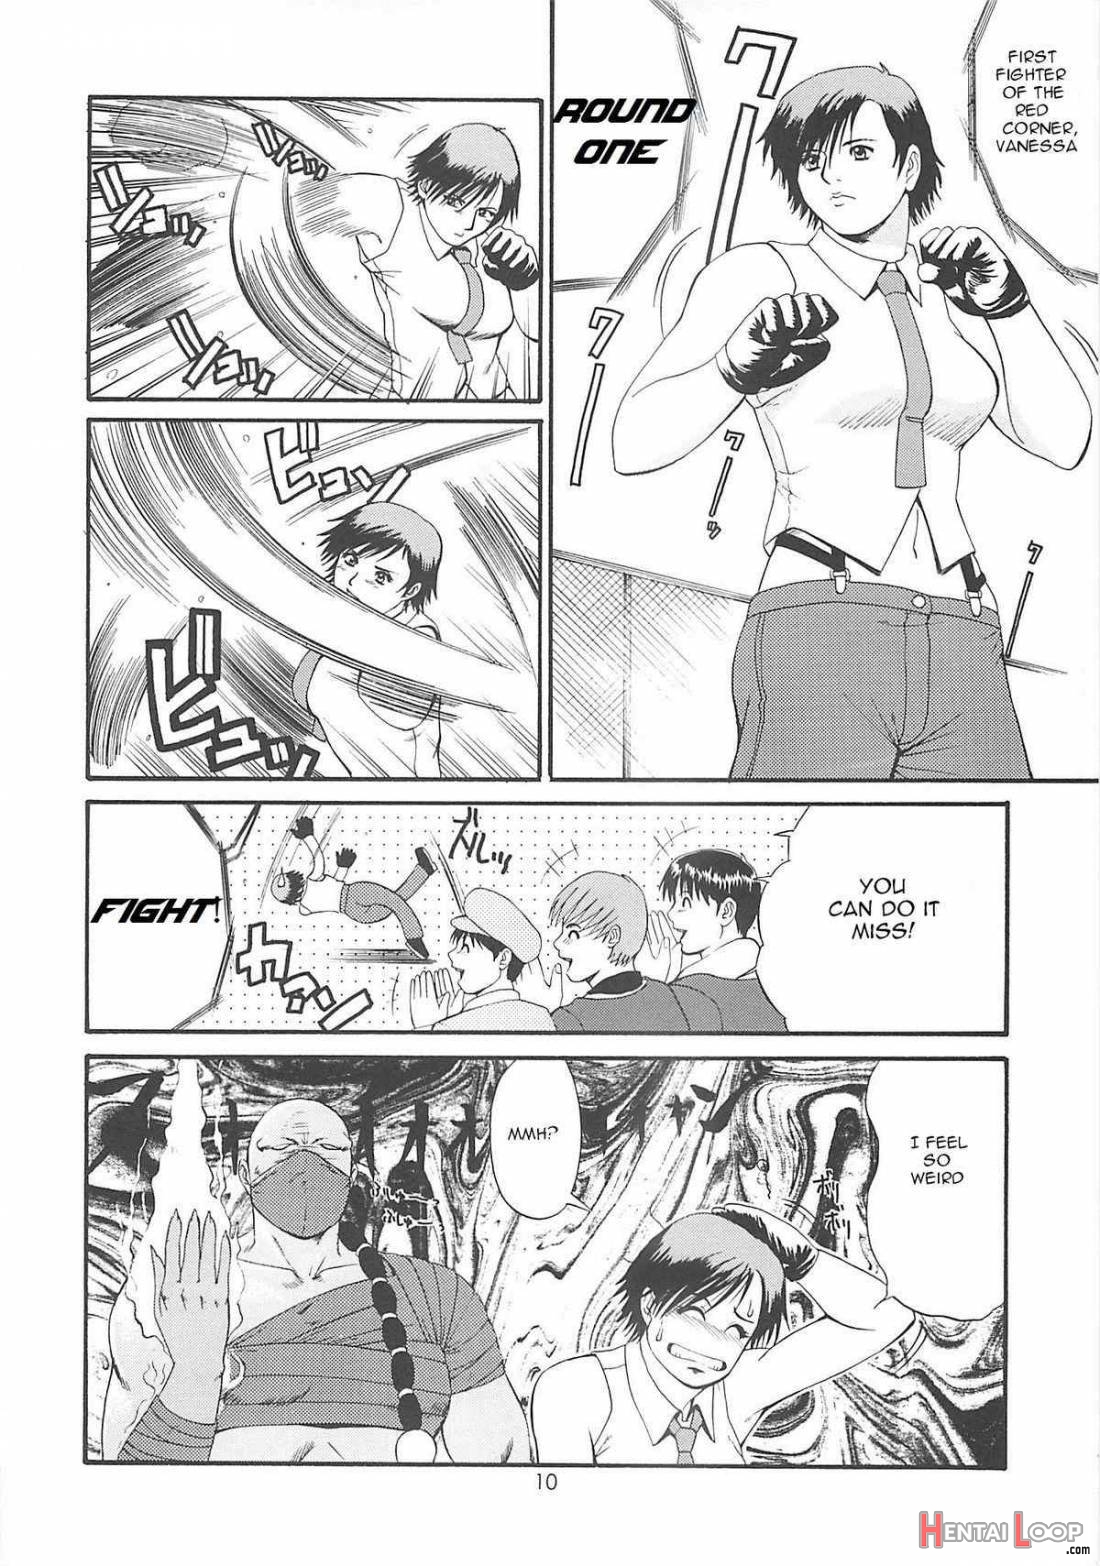 The Yuri&Friends 2000 page 10